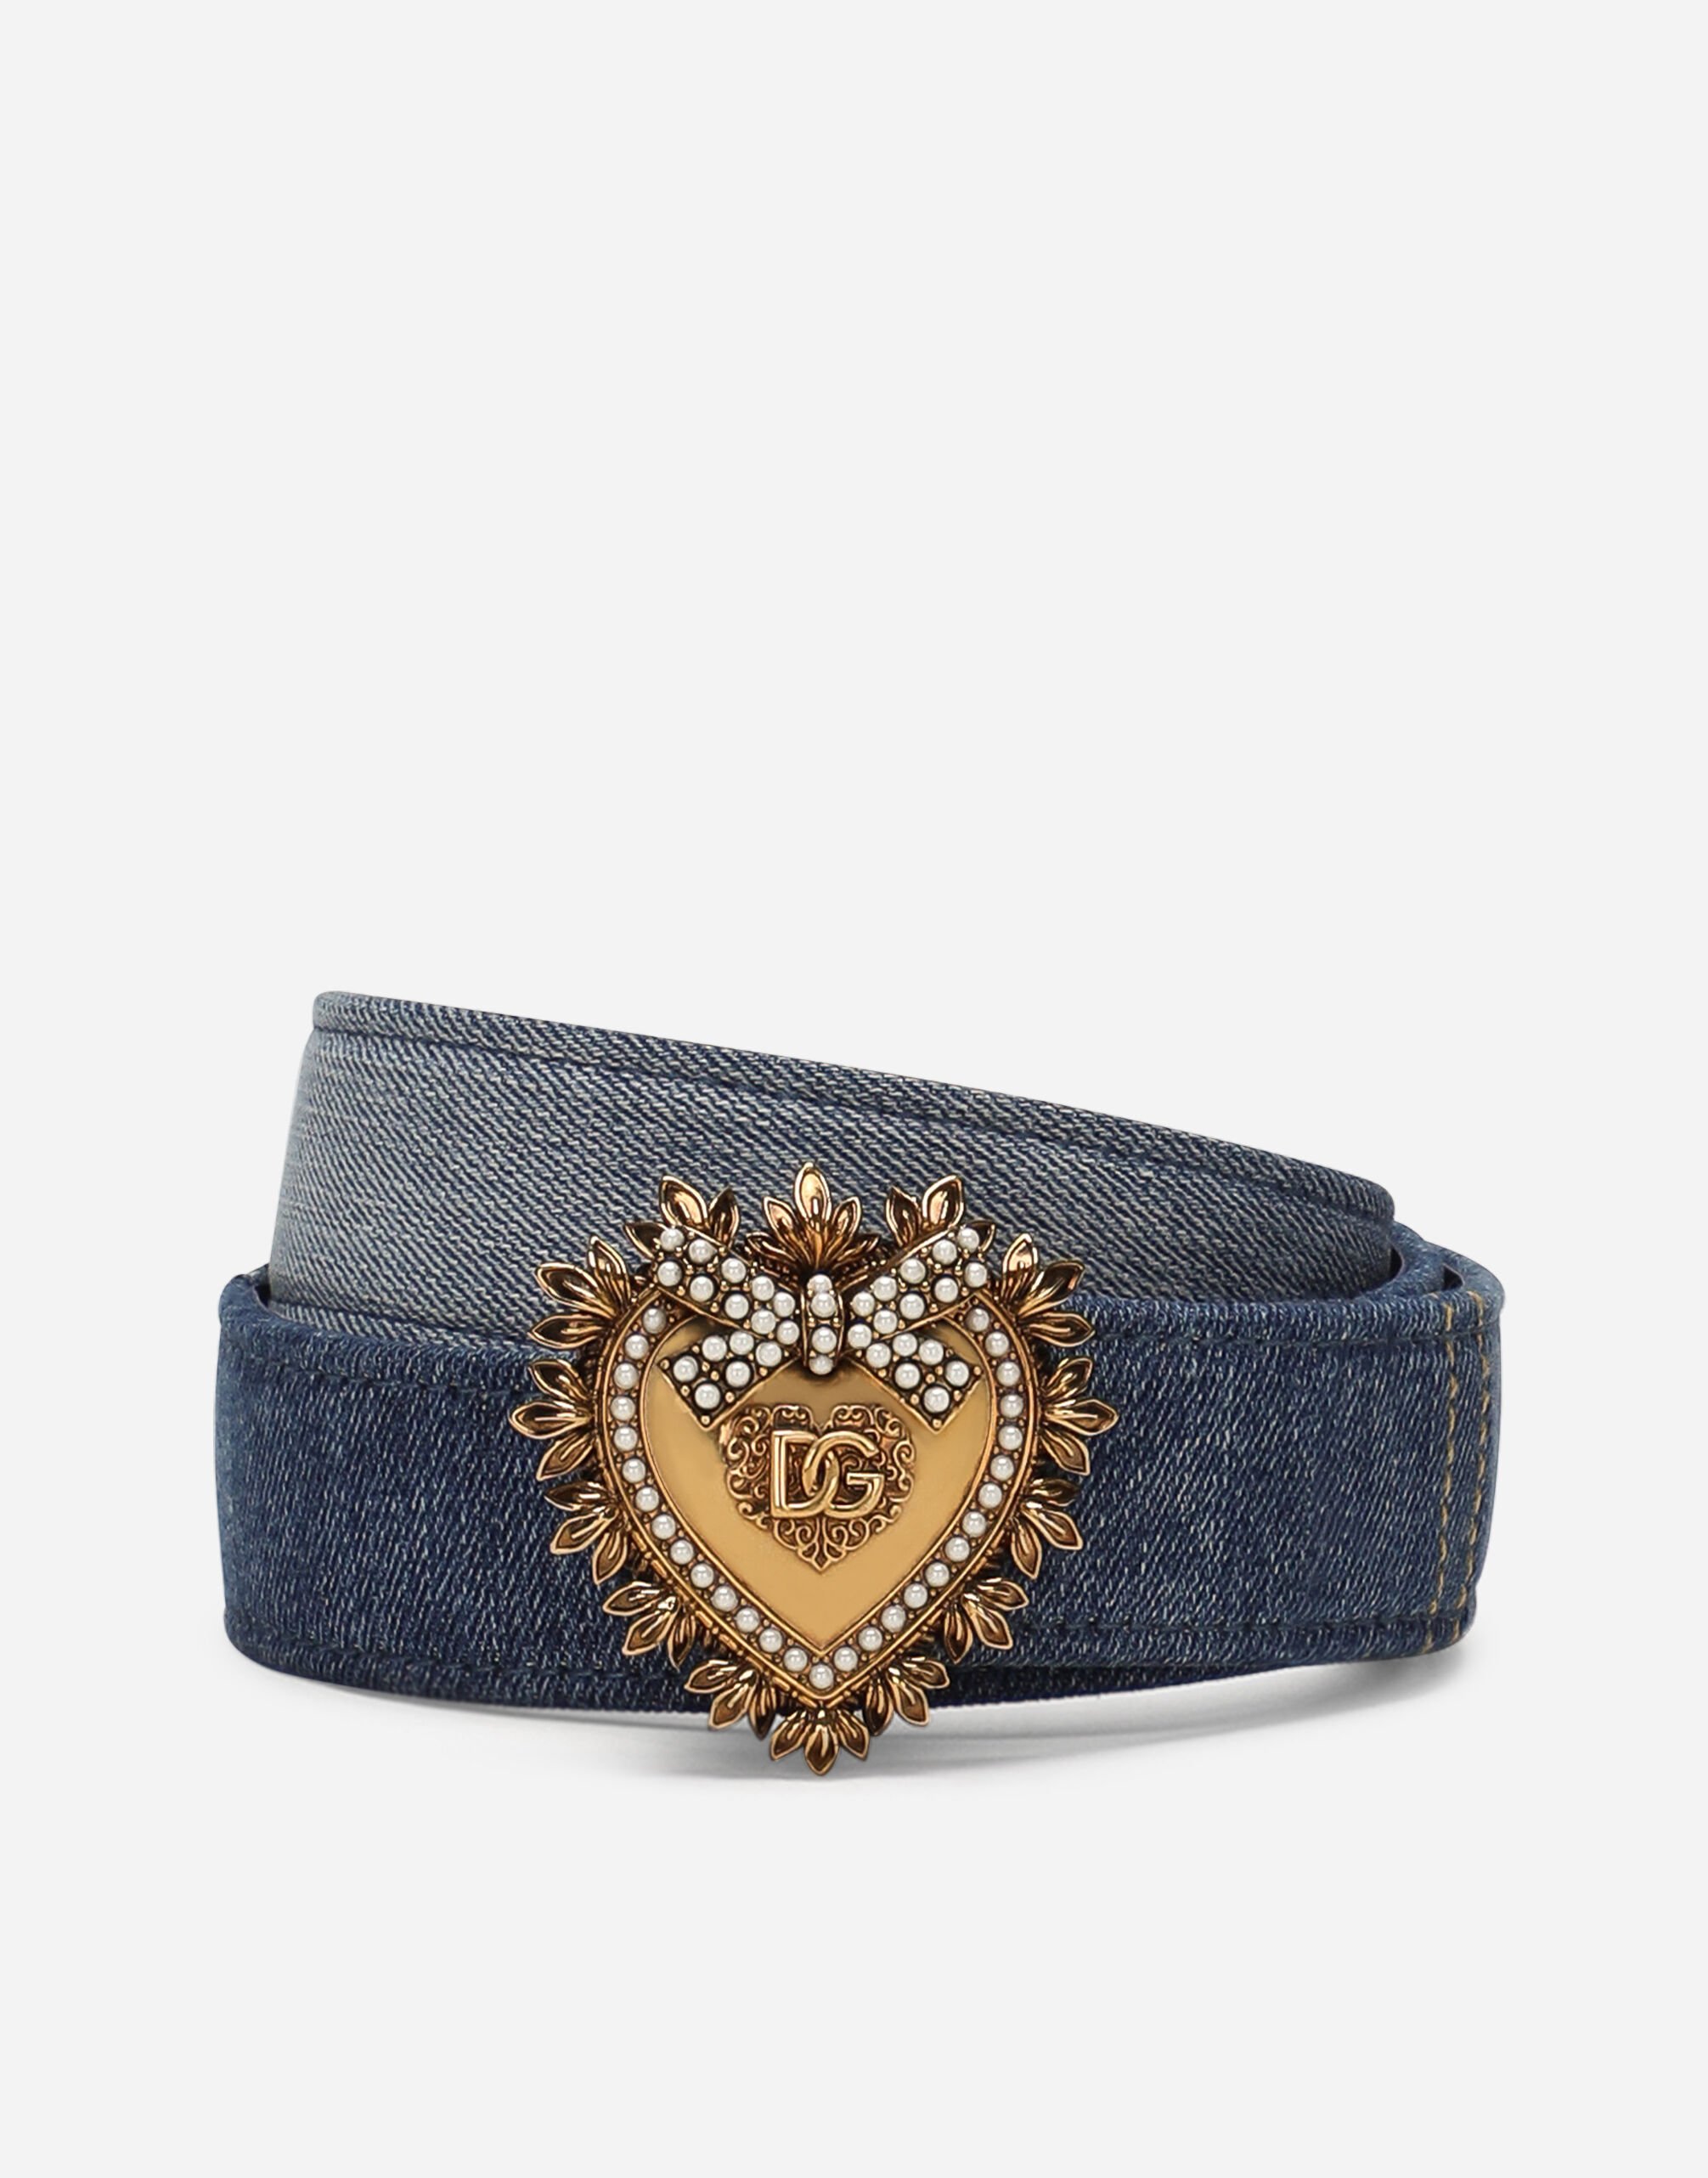 Dolce&Gabbana Devotion belt in patchwork denim Blue BE1517A2Y54